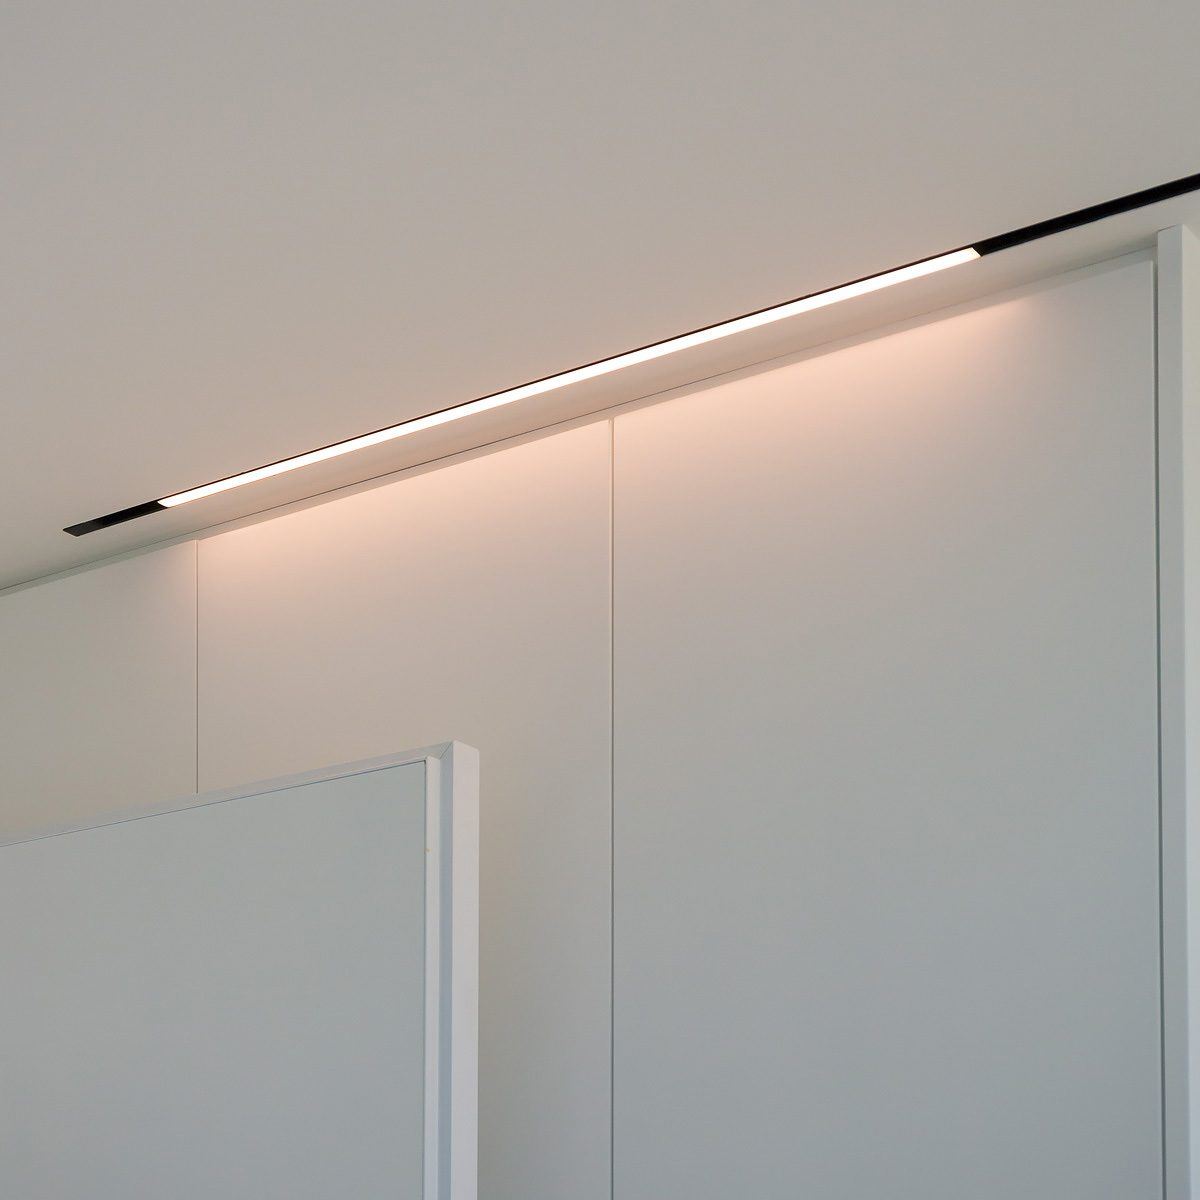 Private house קמחי תאורה - עיצוב תאורה בתקרה